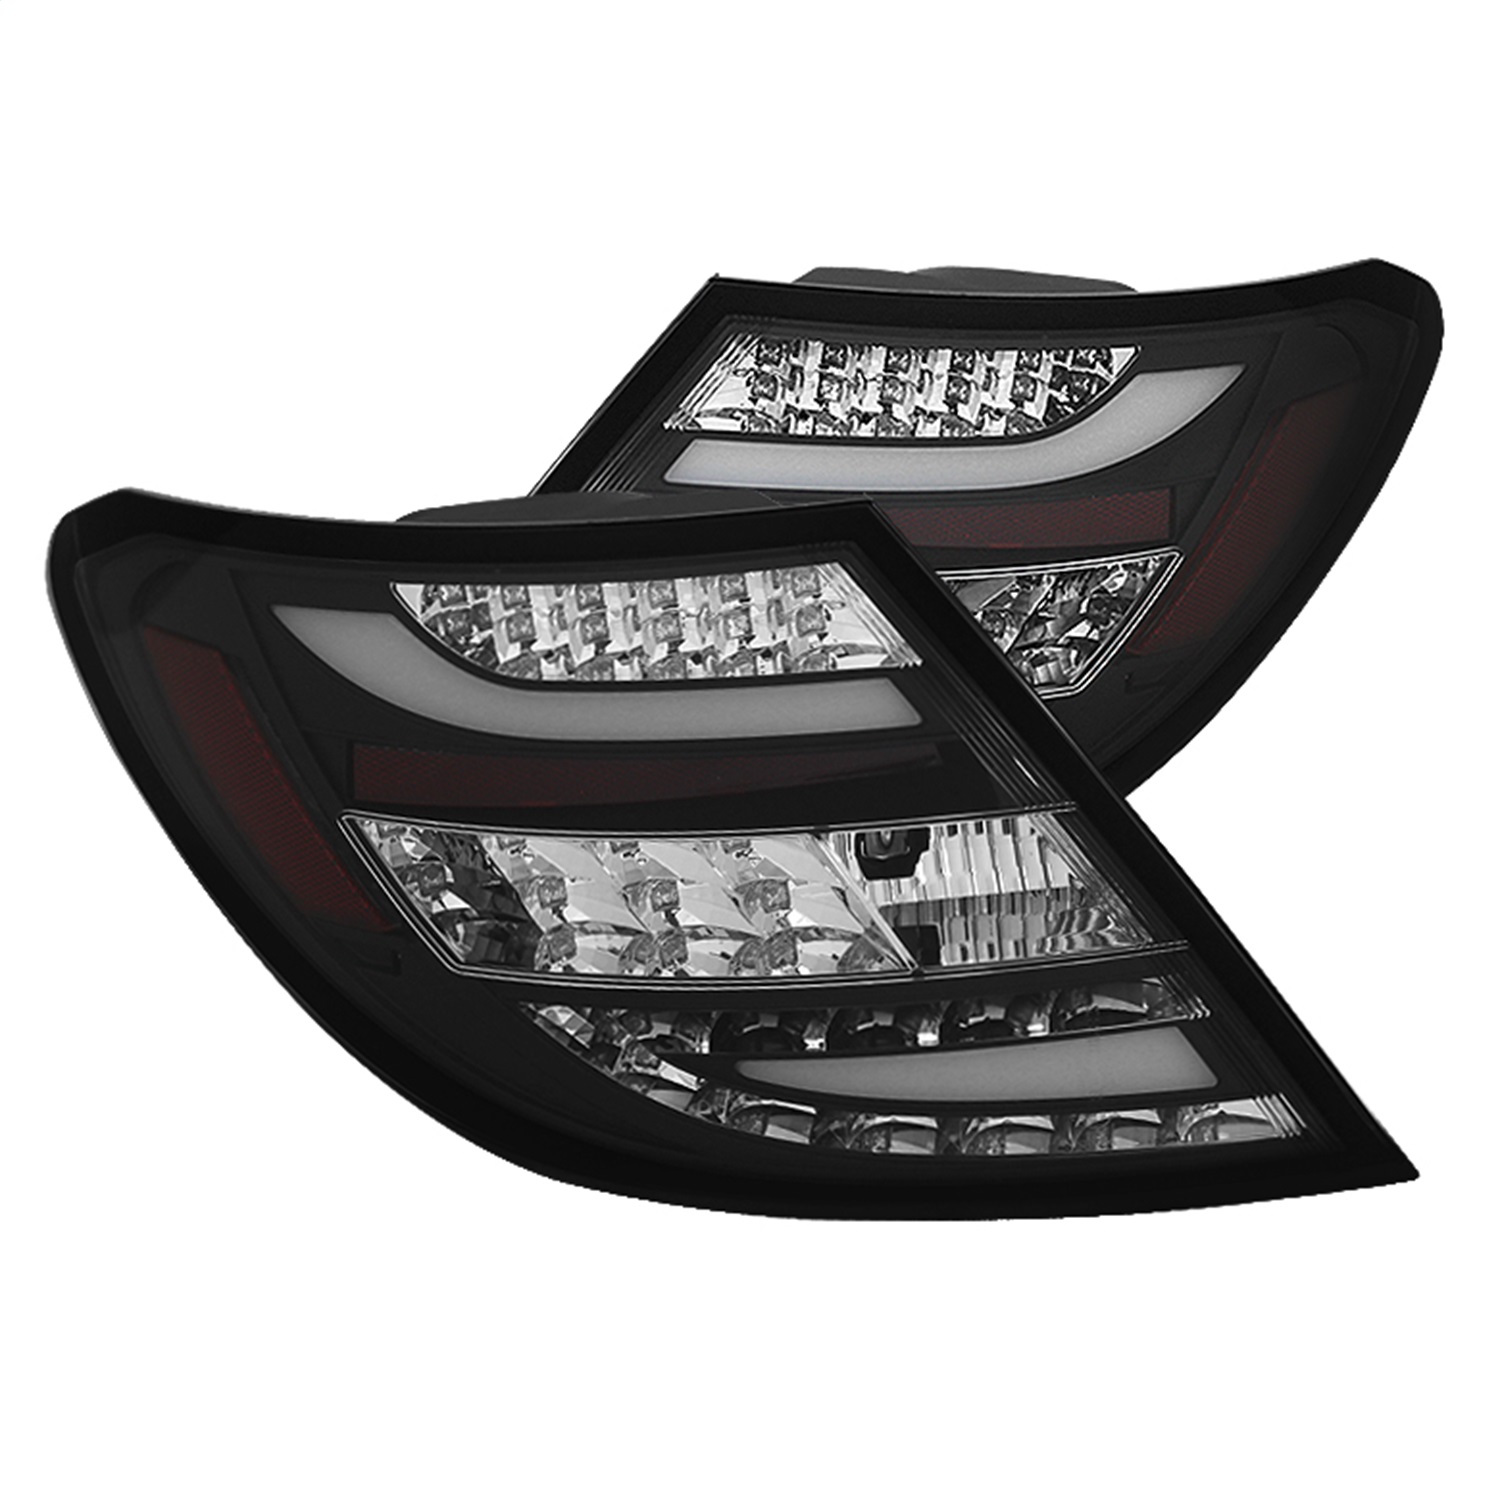 Spyder Auto 5072689 LED Tail Lights Fits 08-11 C230 C250 C300 C350 C63 AMG